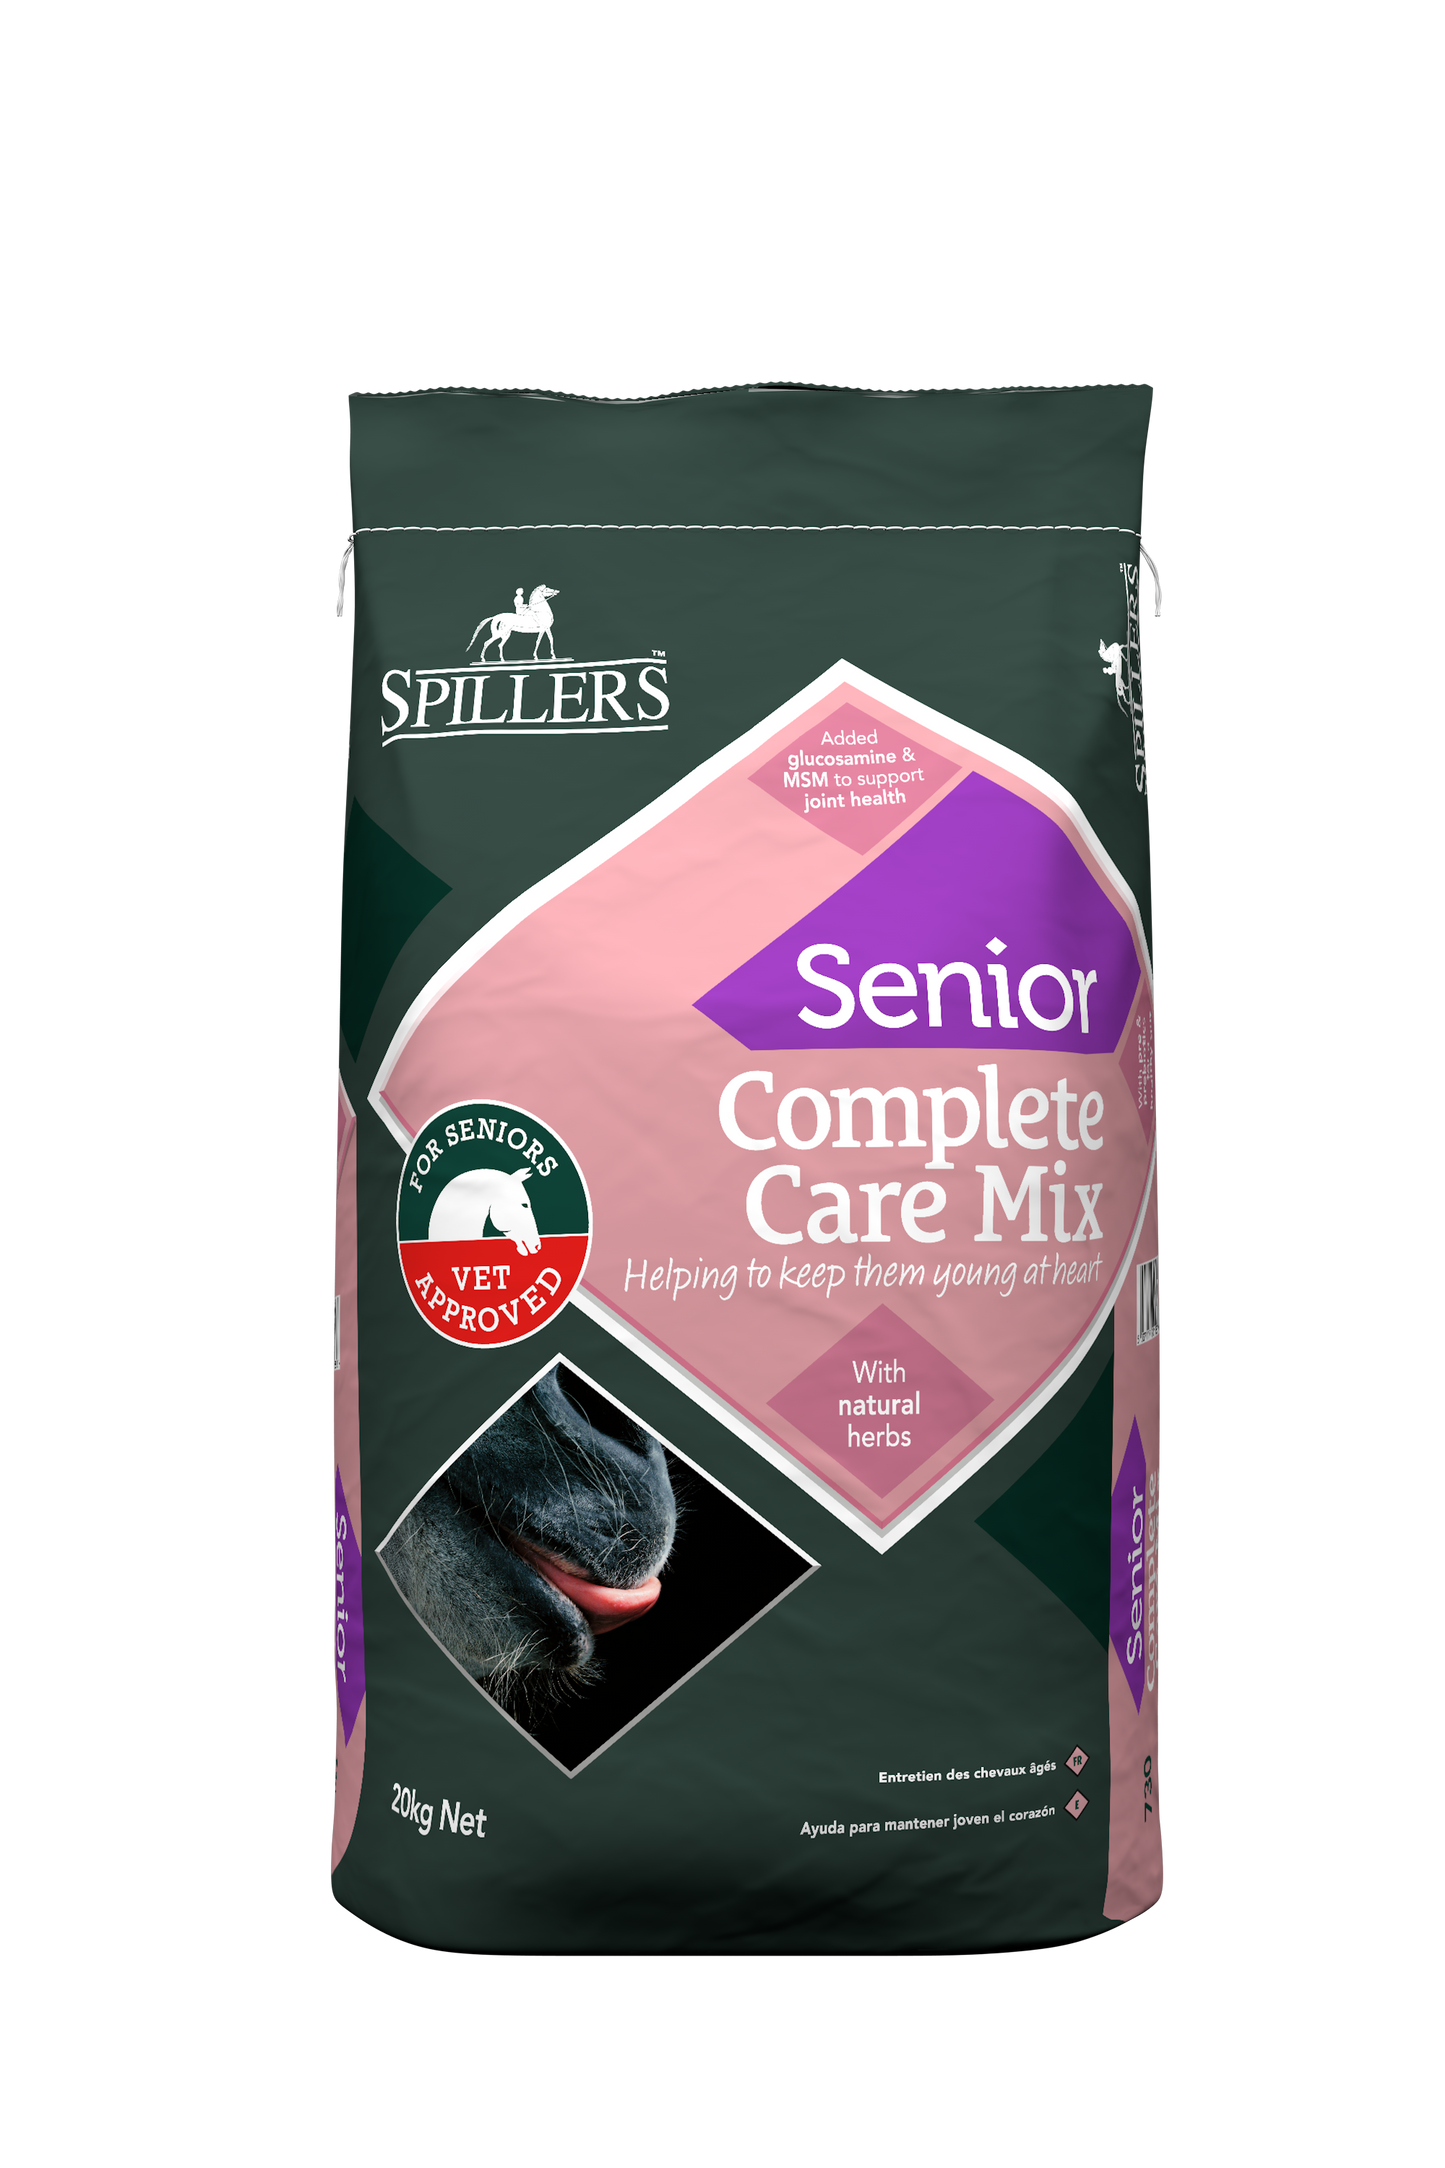 Spillers Senior Complete Care Mix